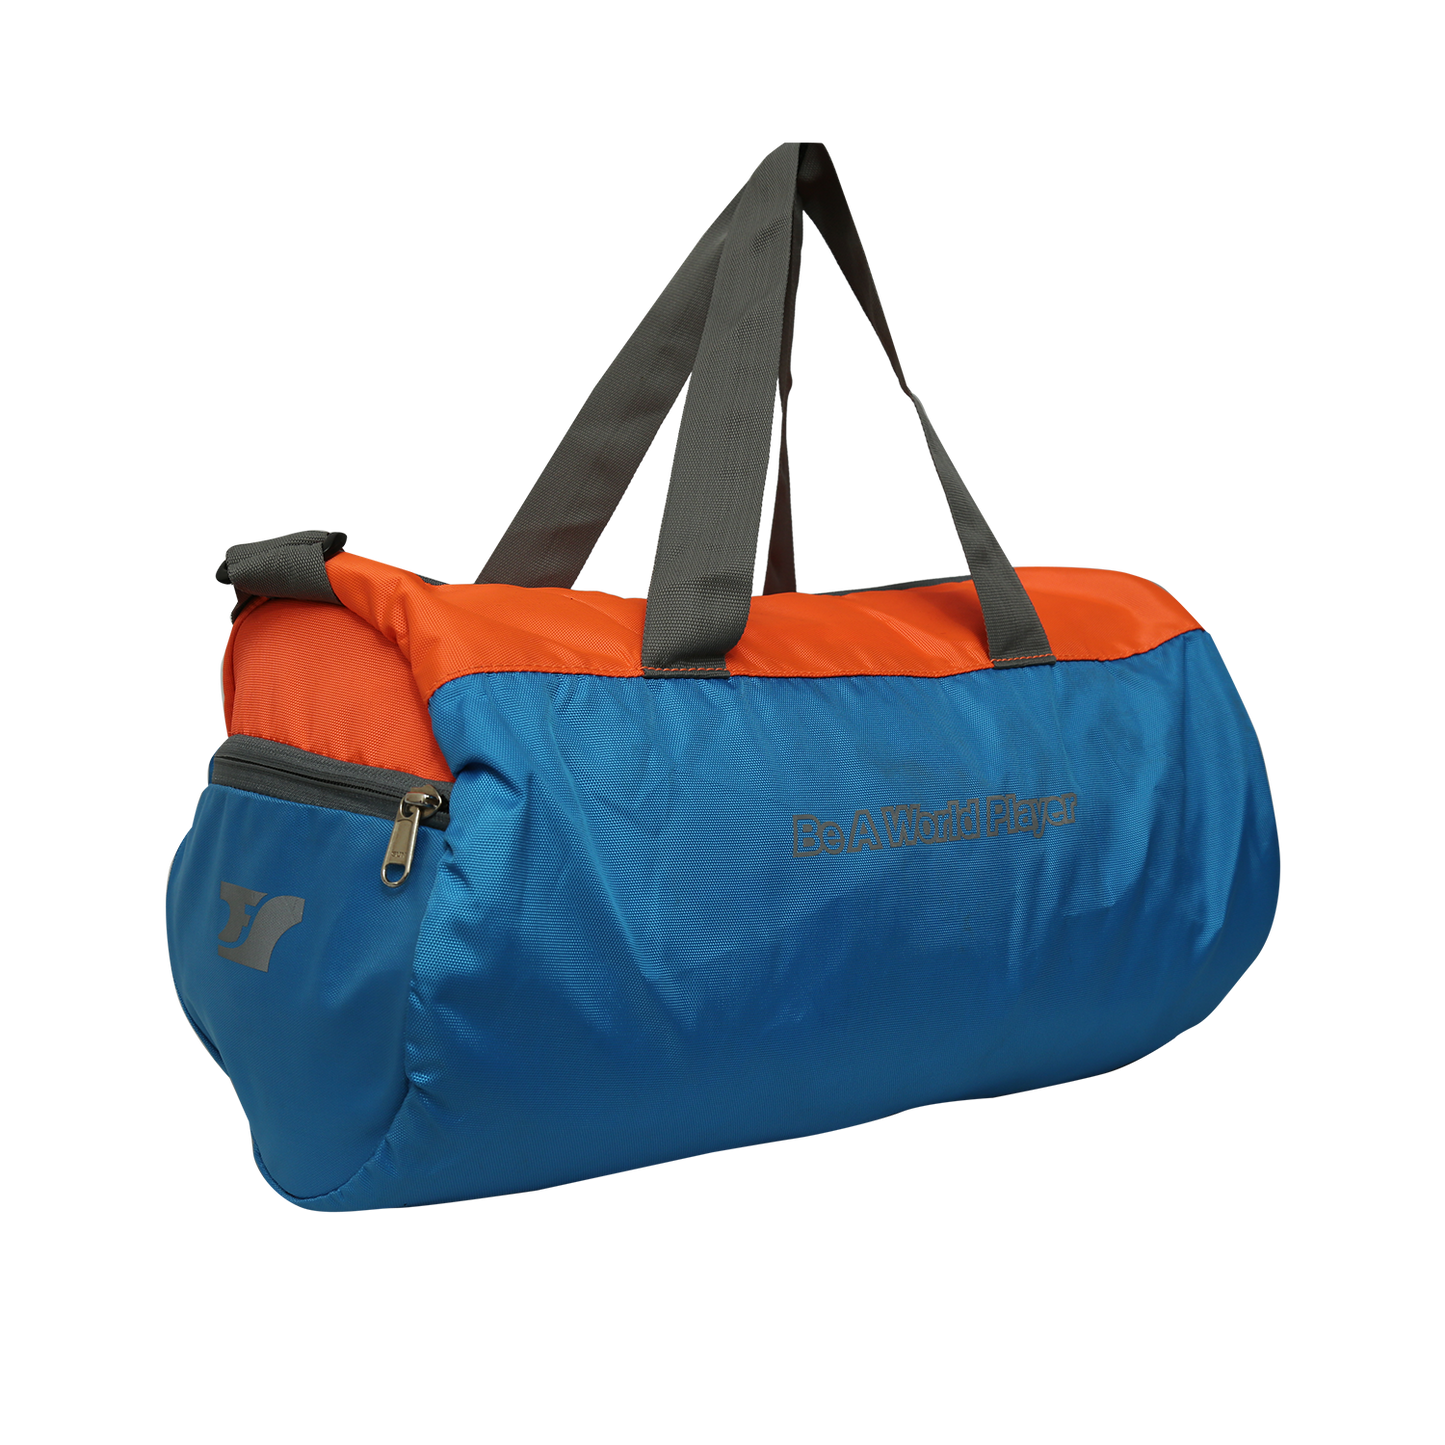 TD-3 Medium Size Travel Duffel Bag